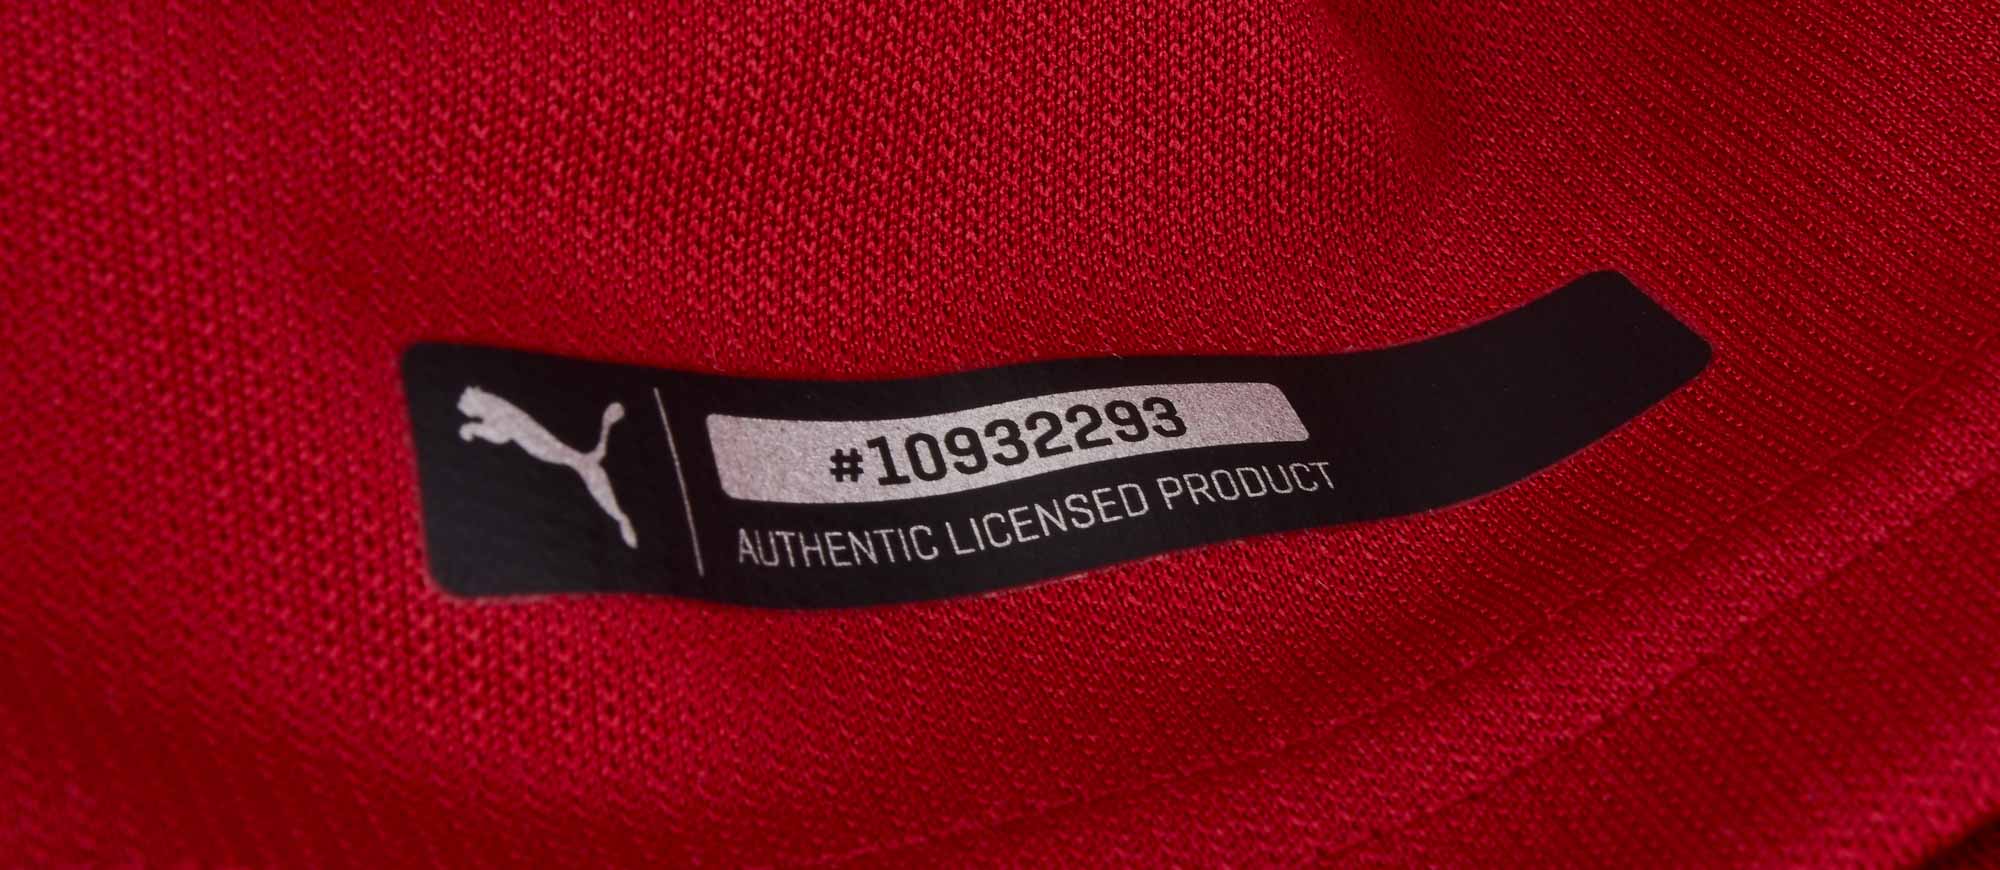 puma authentic licensed product number